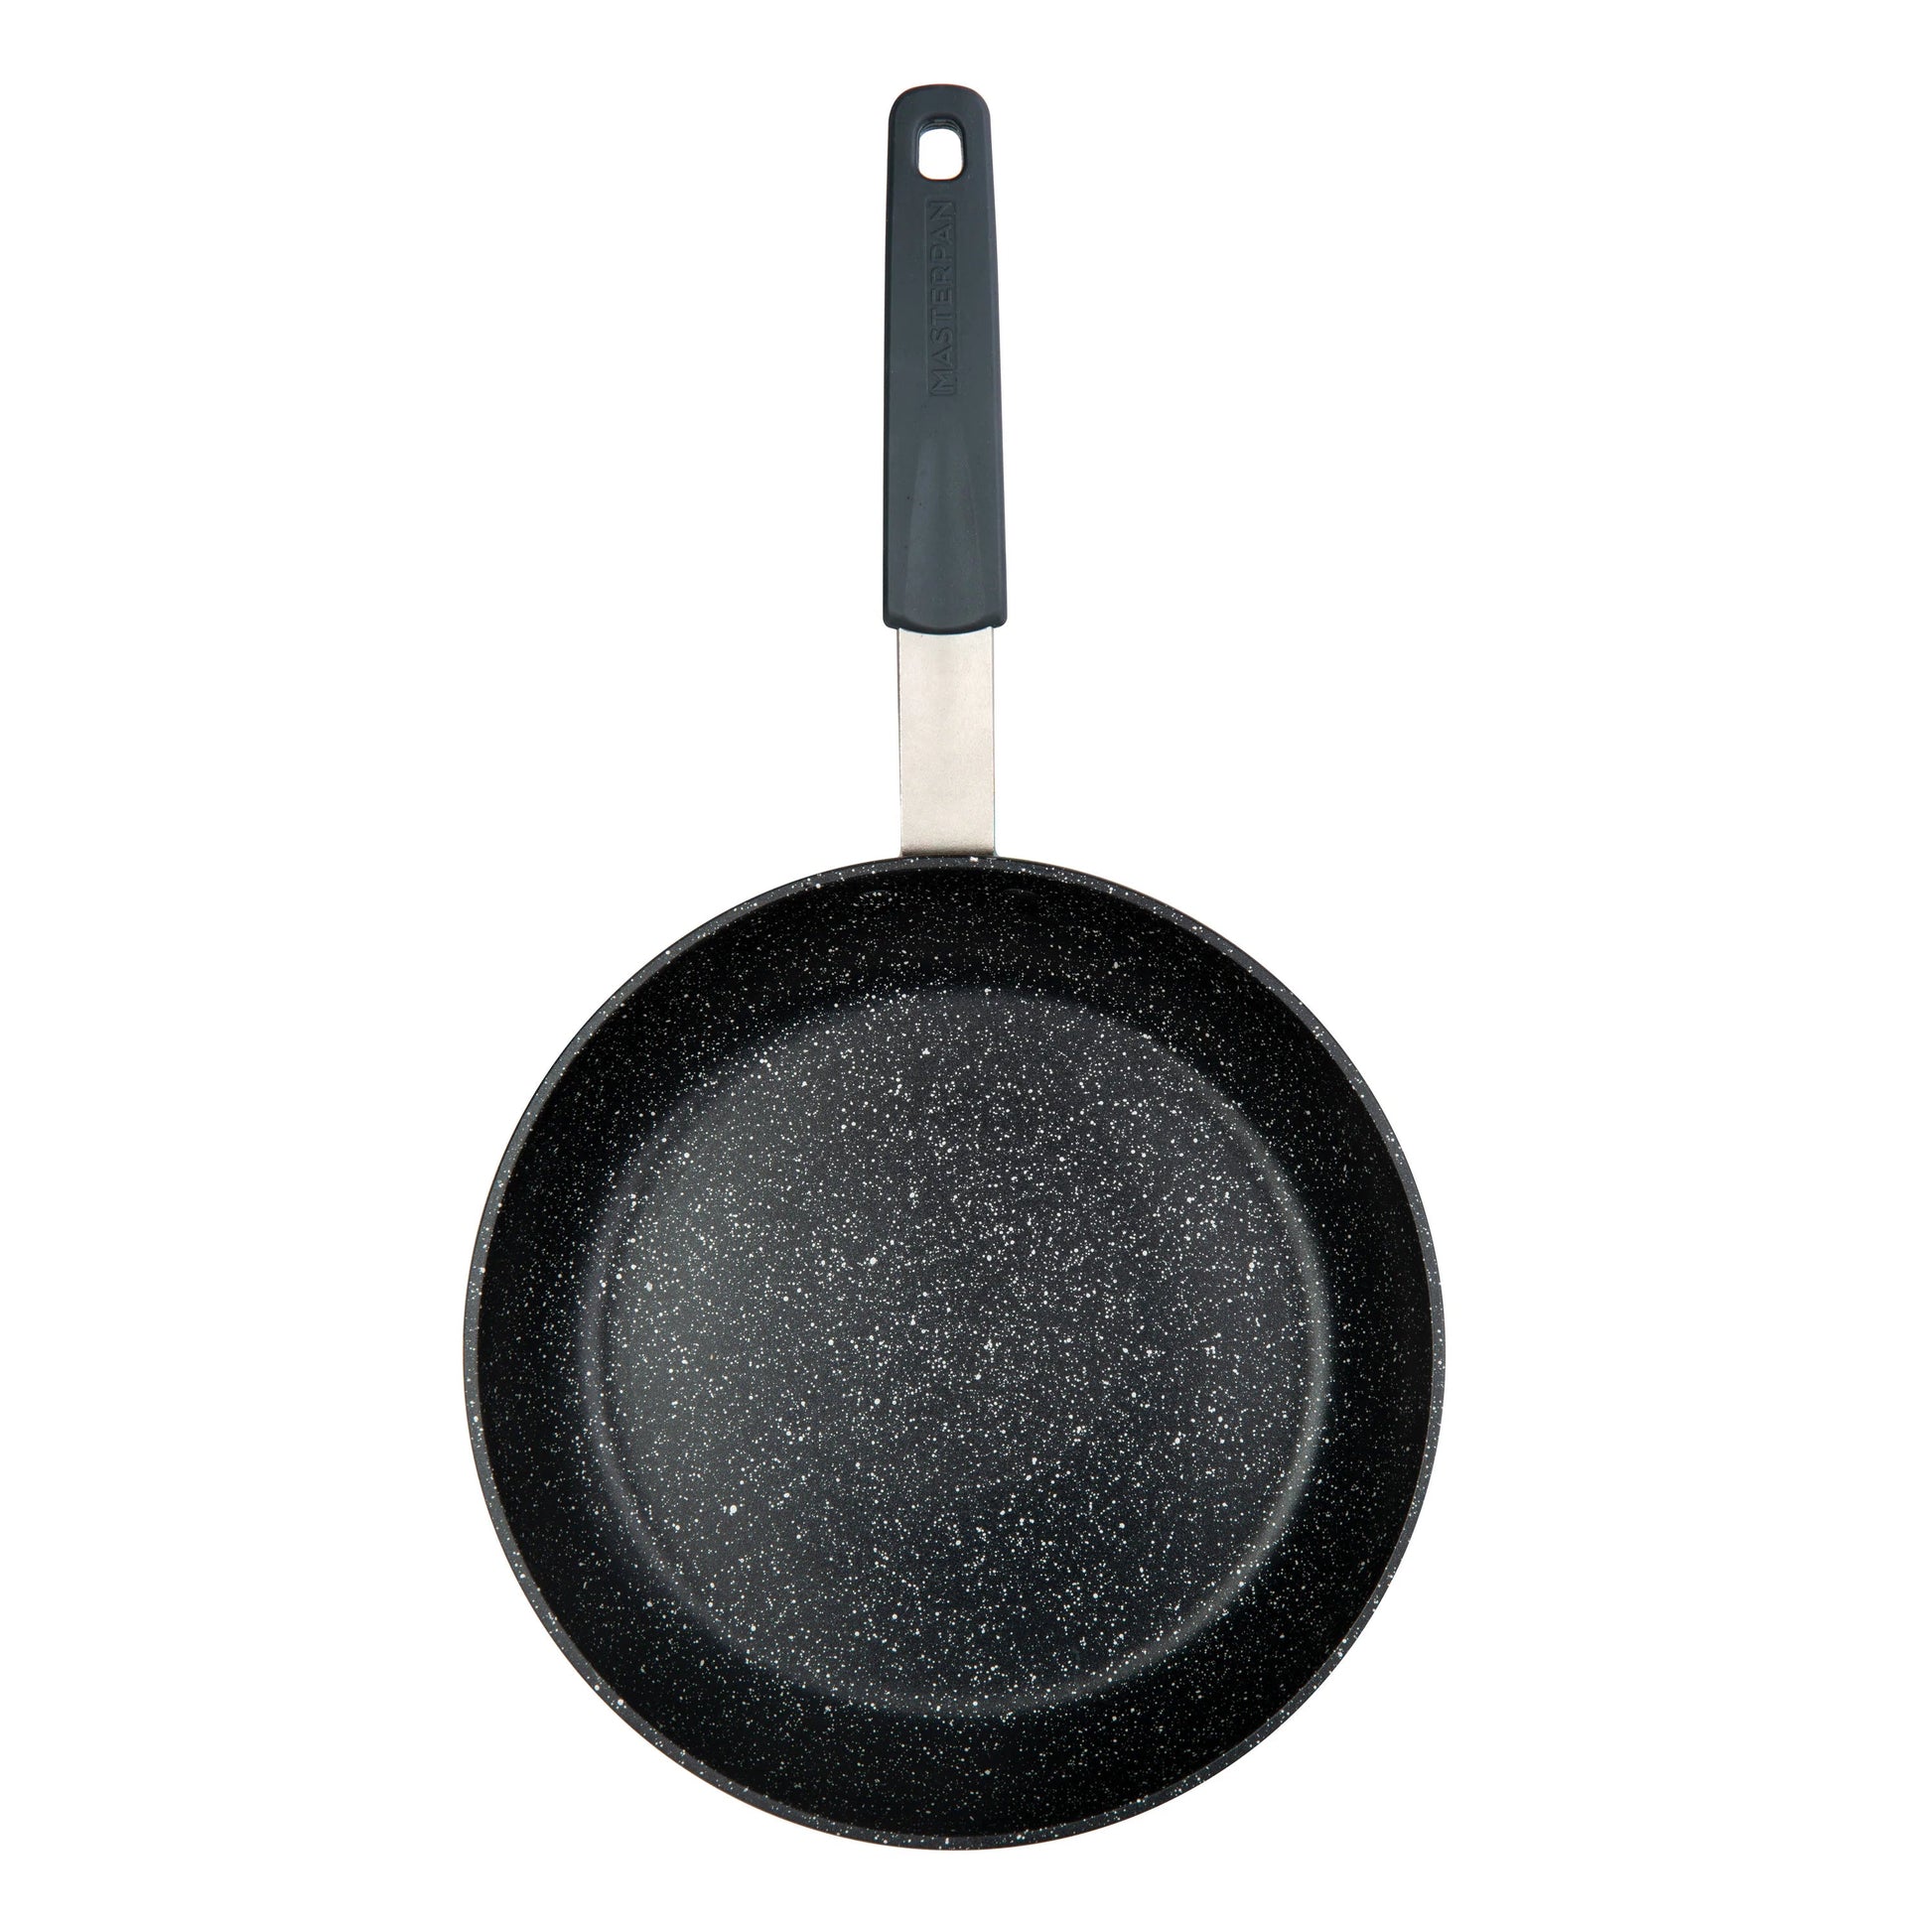 MasterPan 11 Designer Series Non-Stick Cast Aluminum Crepe Pan with Detachable Handle Black